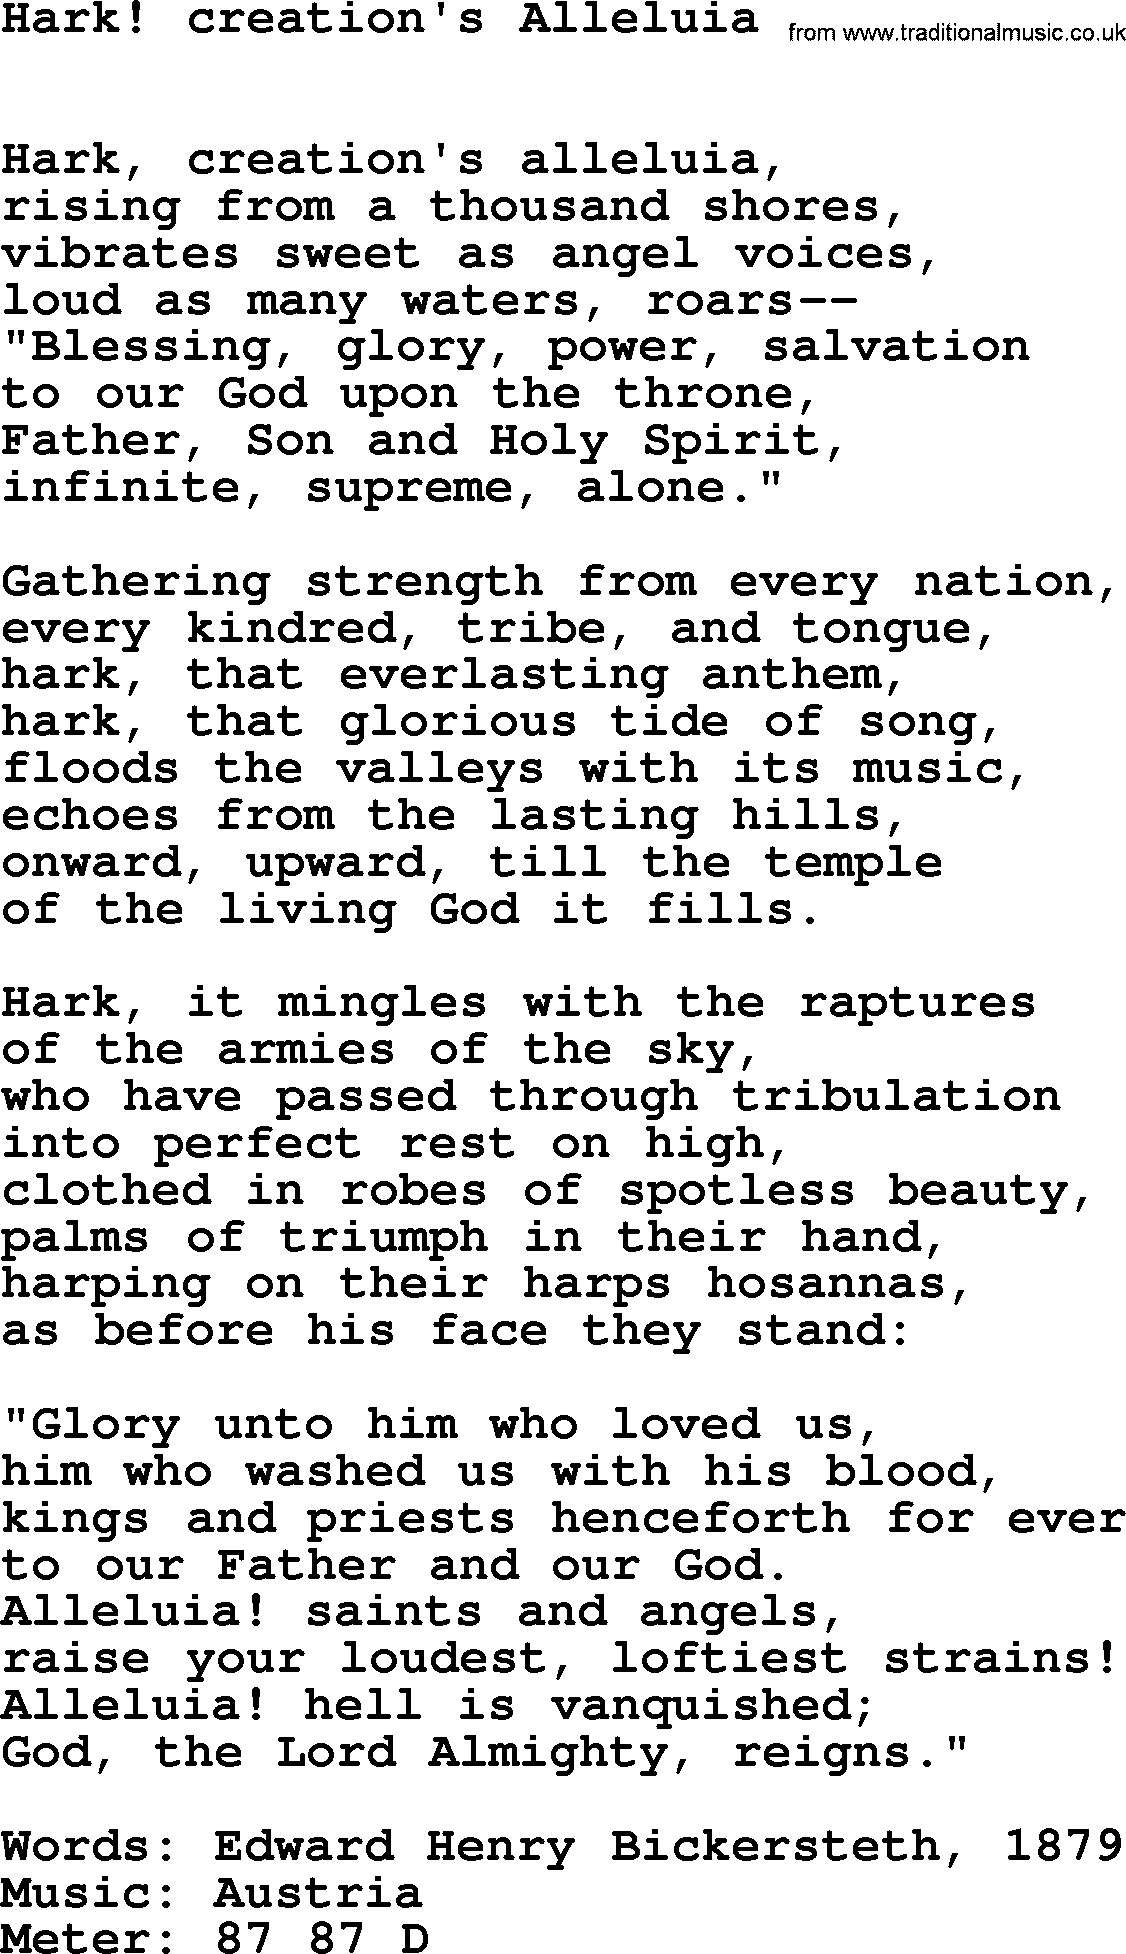 Book of Common Praise Hymn: Hark! Creation's Alleluia.txt lyrics with midi music